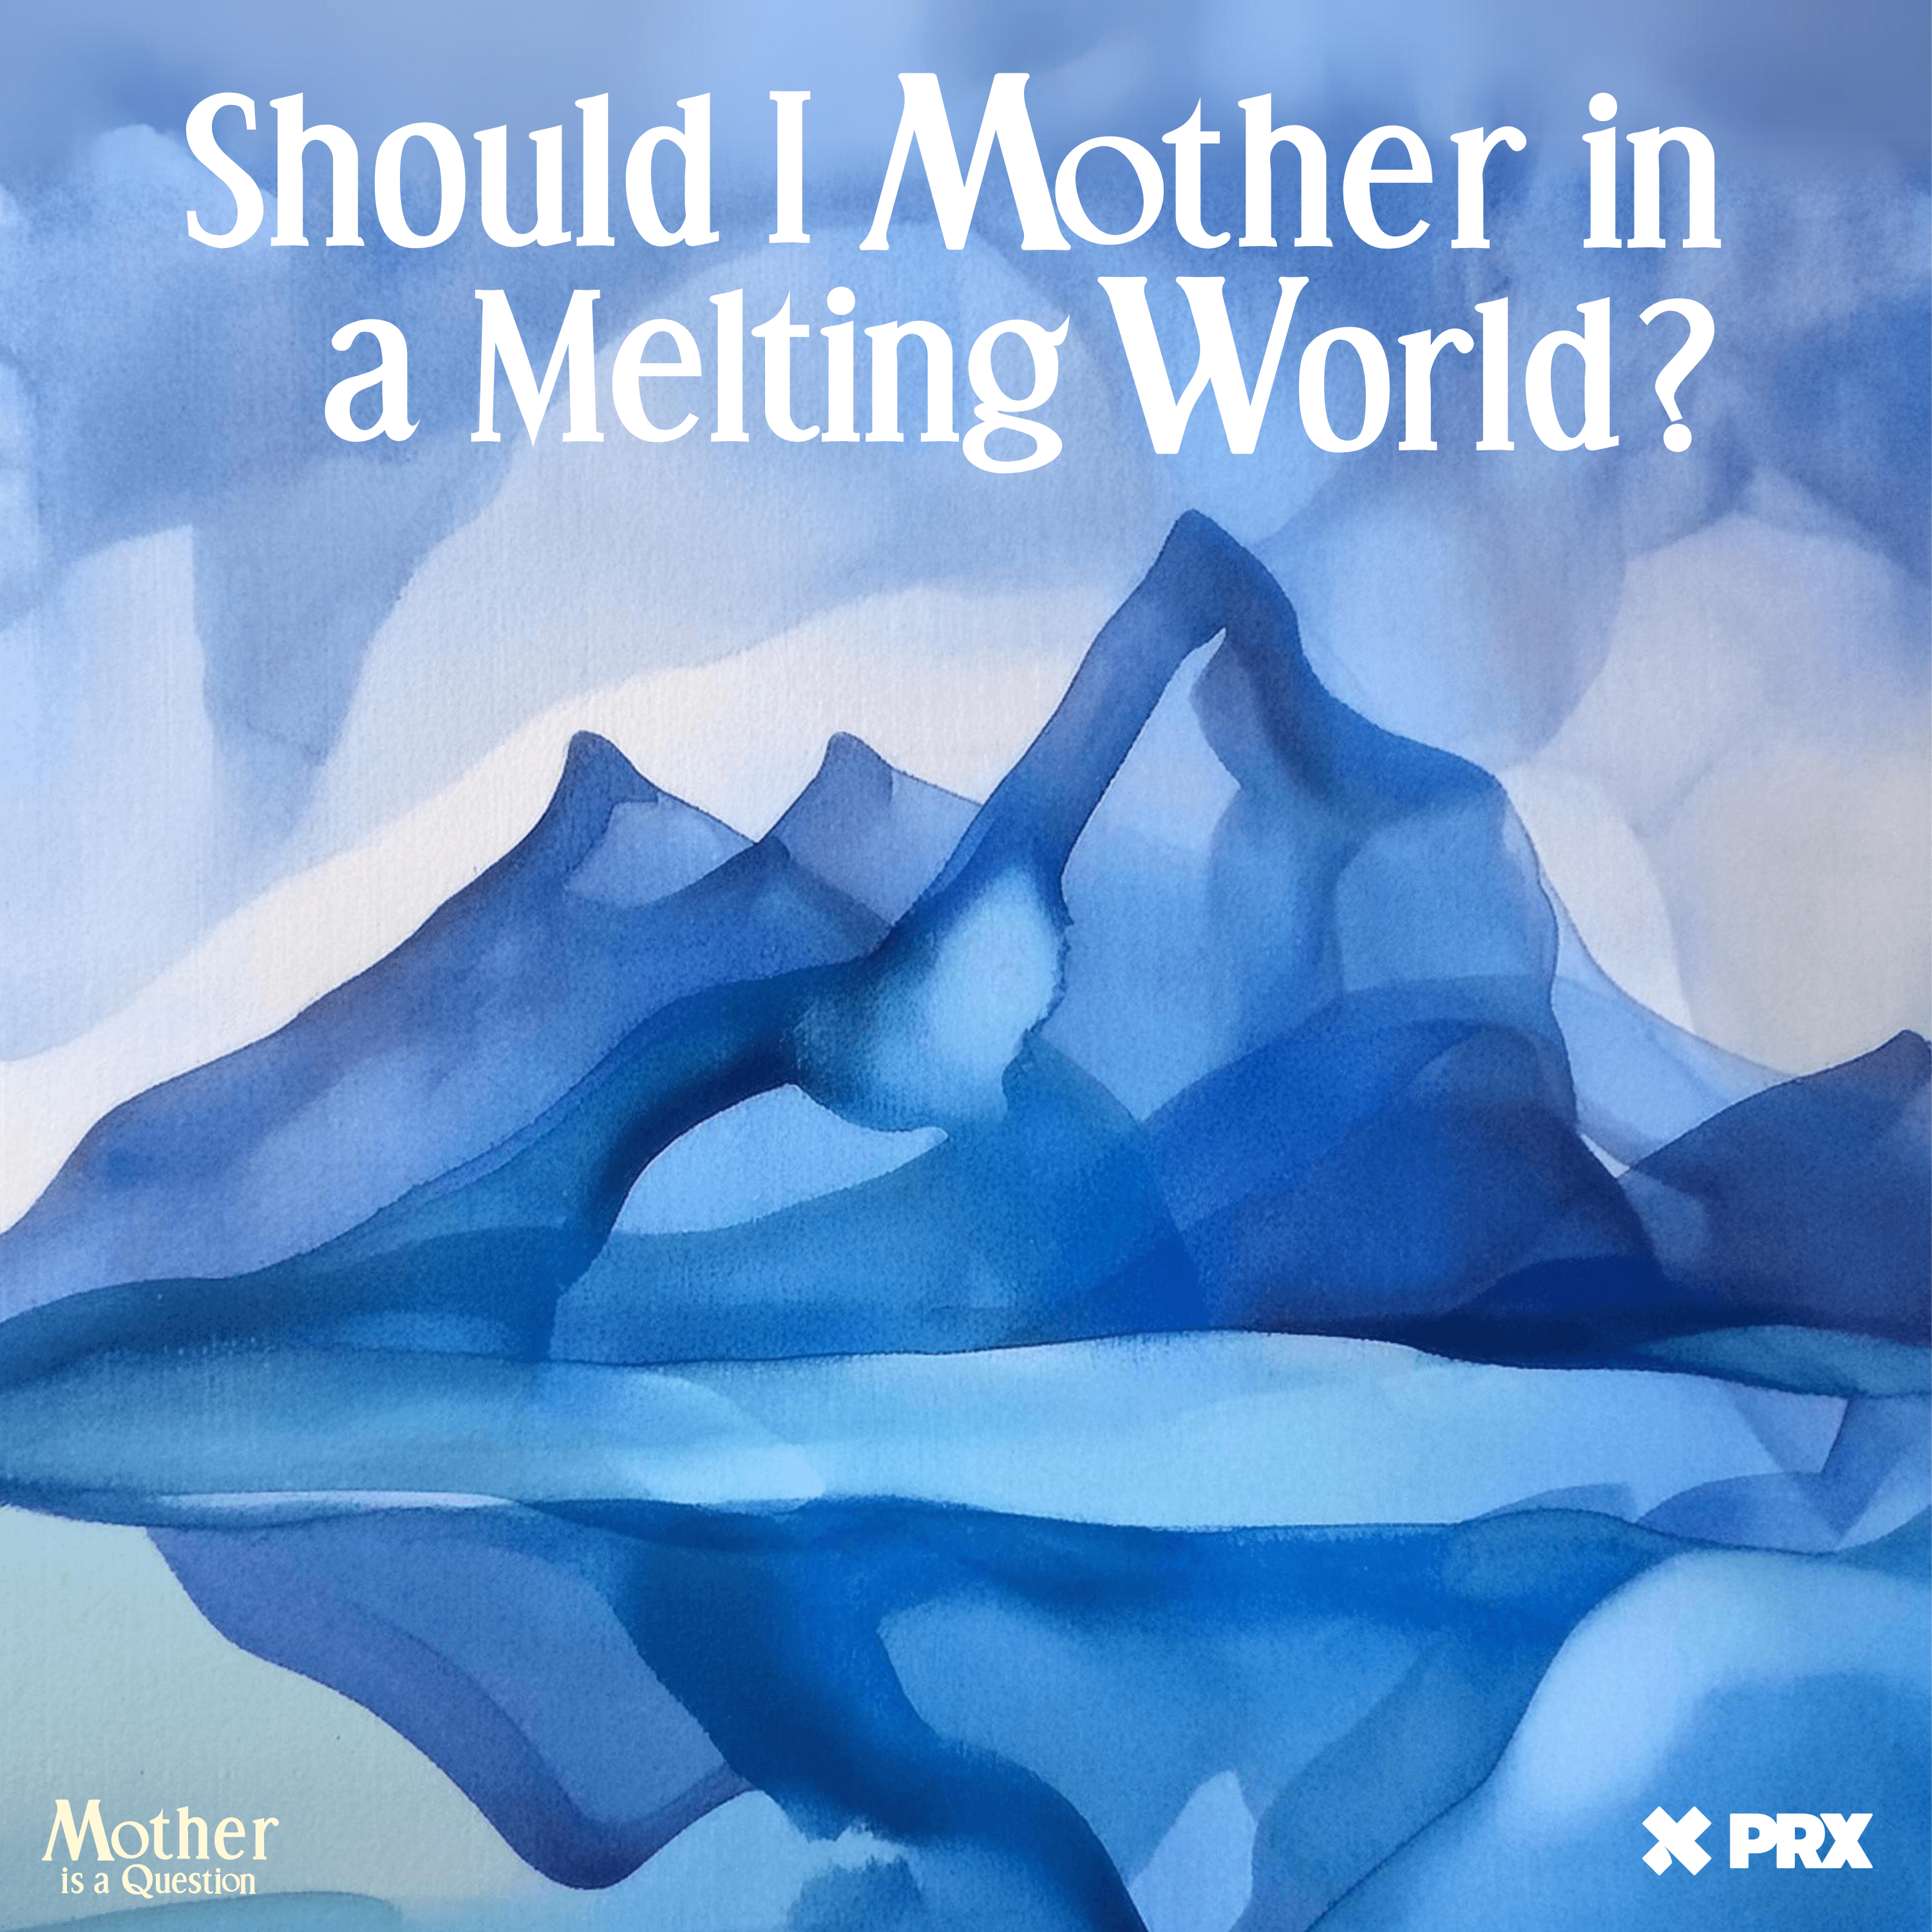 Thumbnail for "Should I Mother in a Melting World? (Elizabeth Rush)".